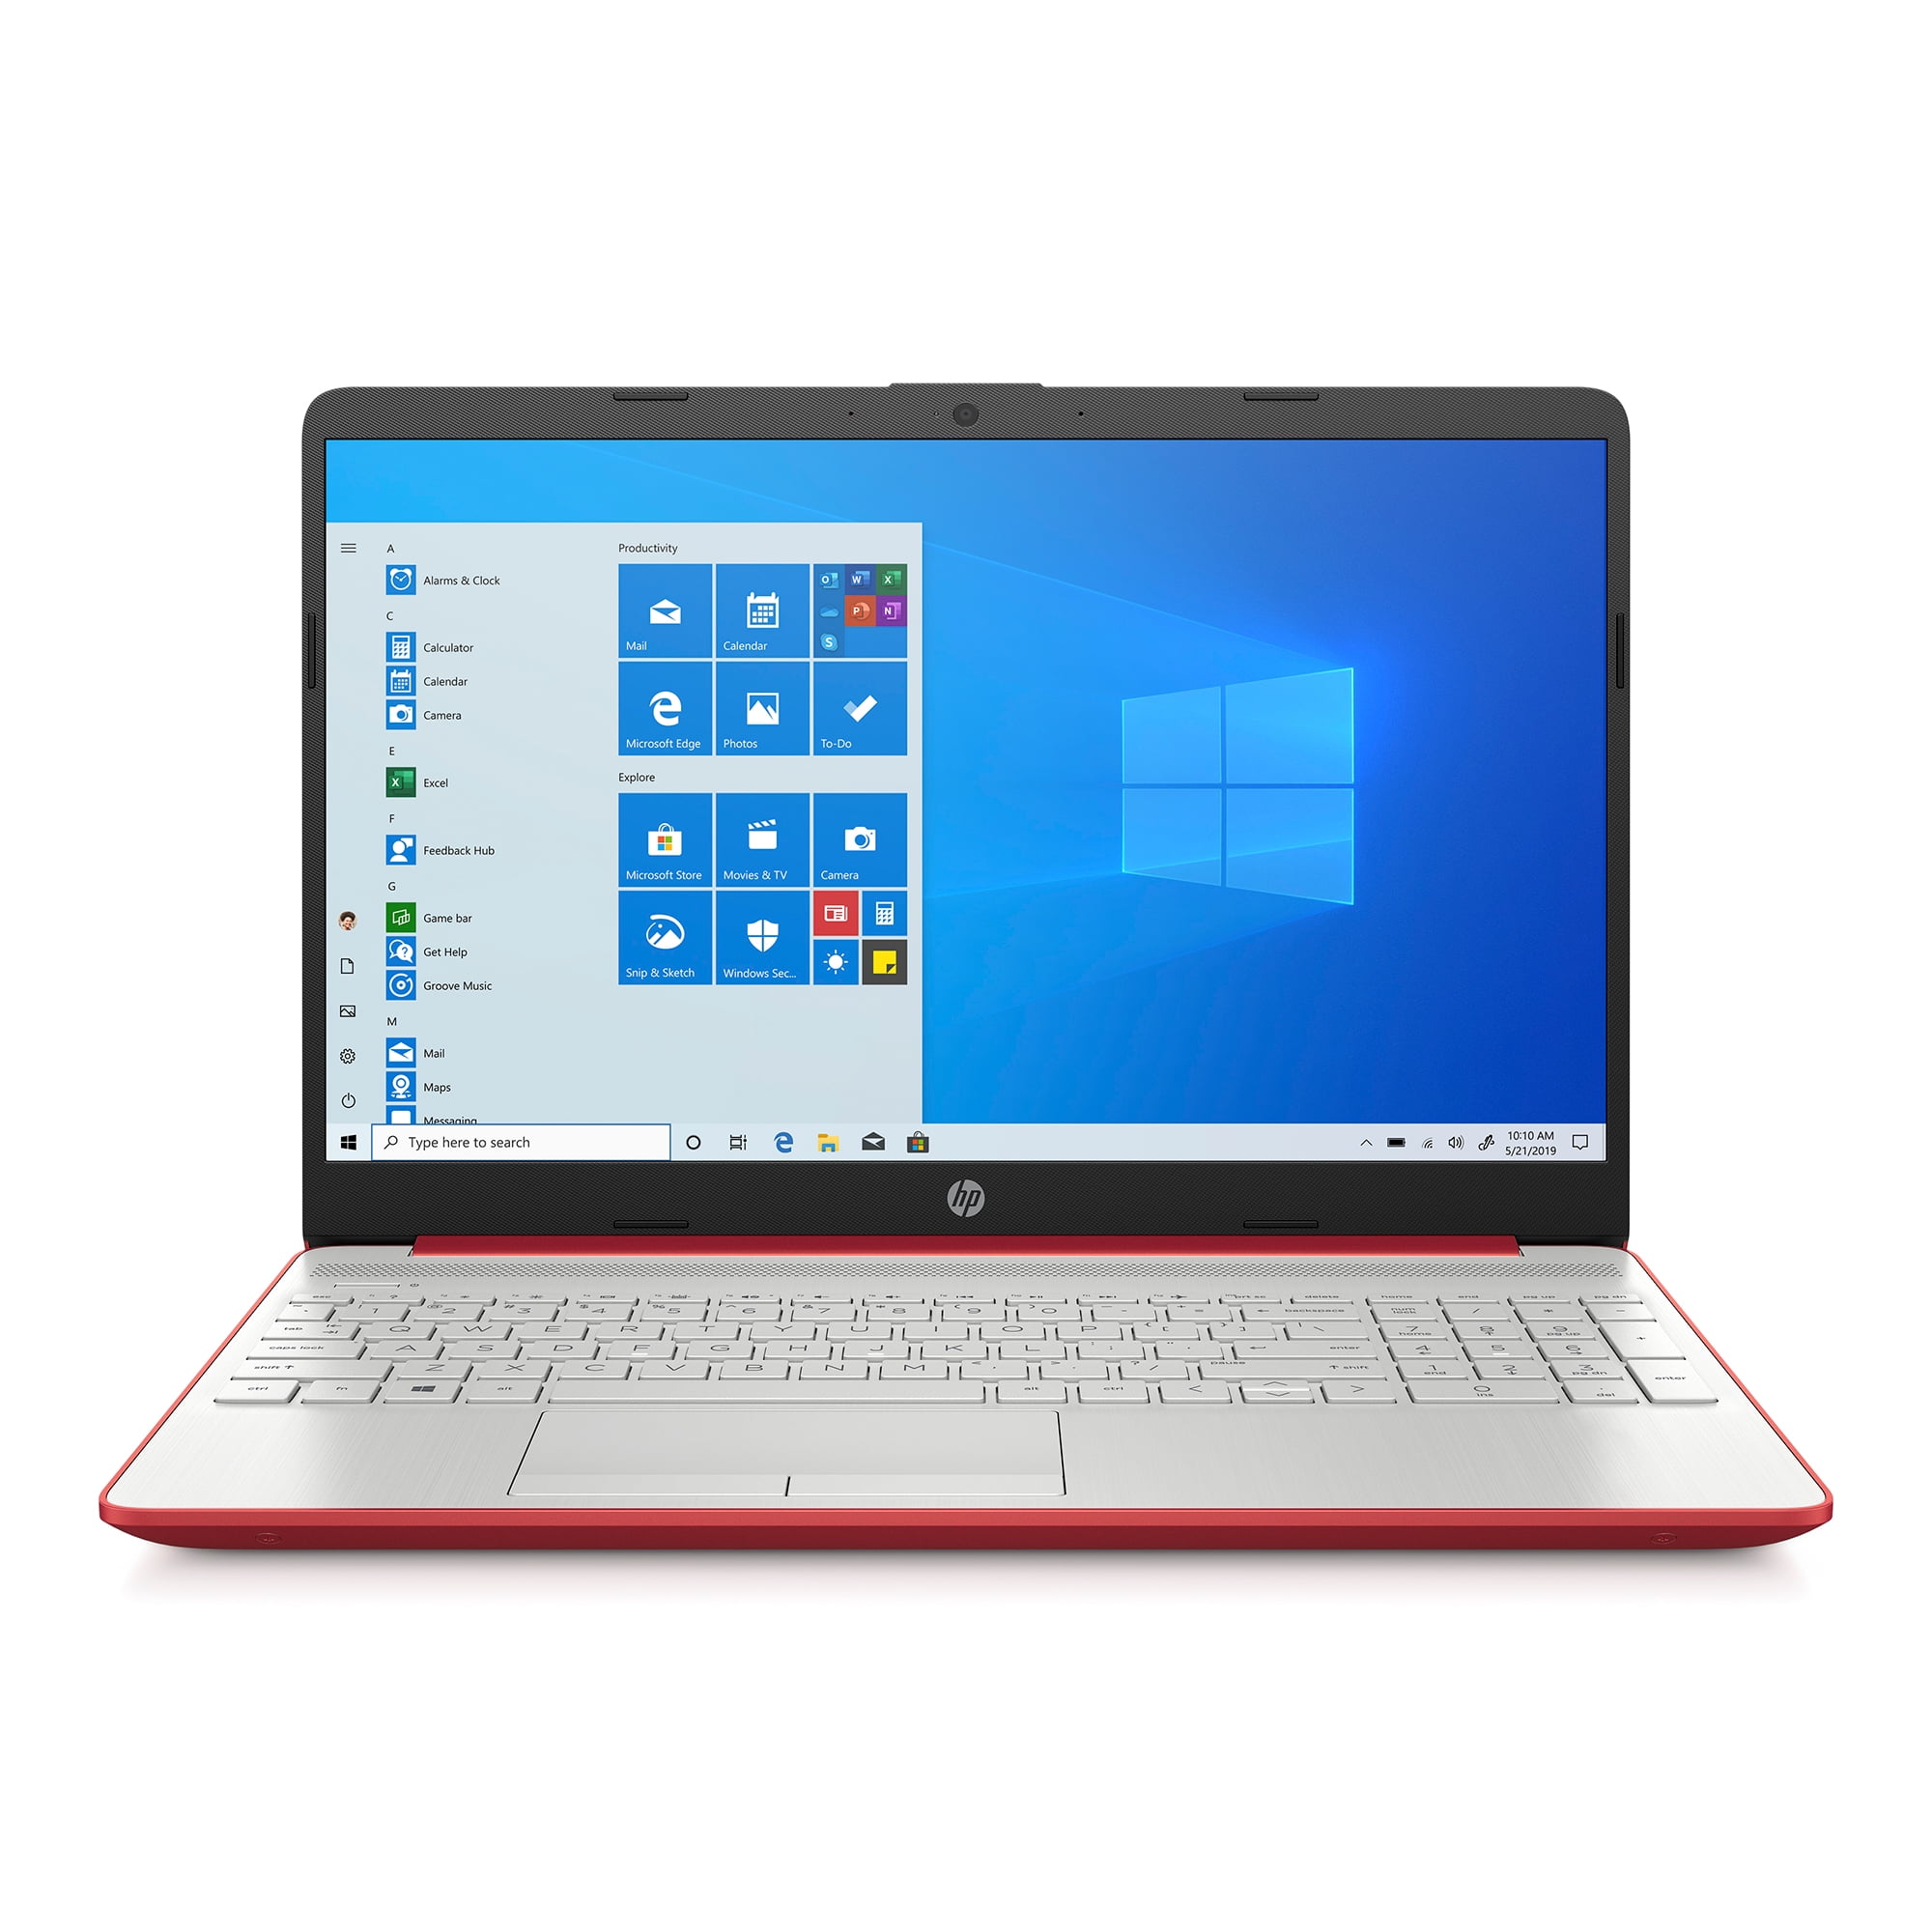 HP 15.6" Laptop, Intel Pentium Silver N5000, 4GB RAM, 128GB SSD, Windows 10 Home with Office , Scarlet Red, 15-dw0083wm